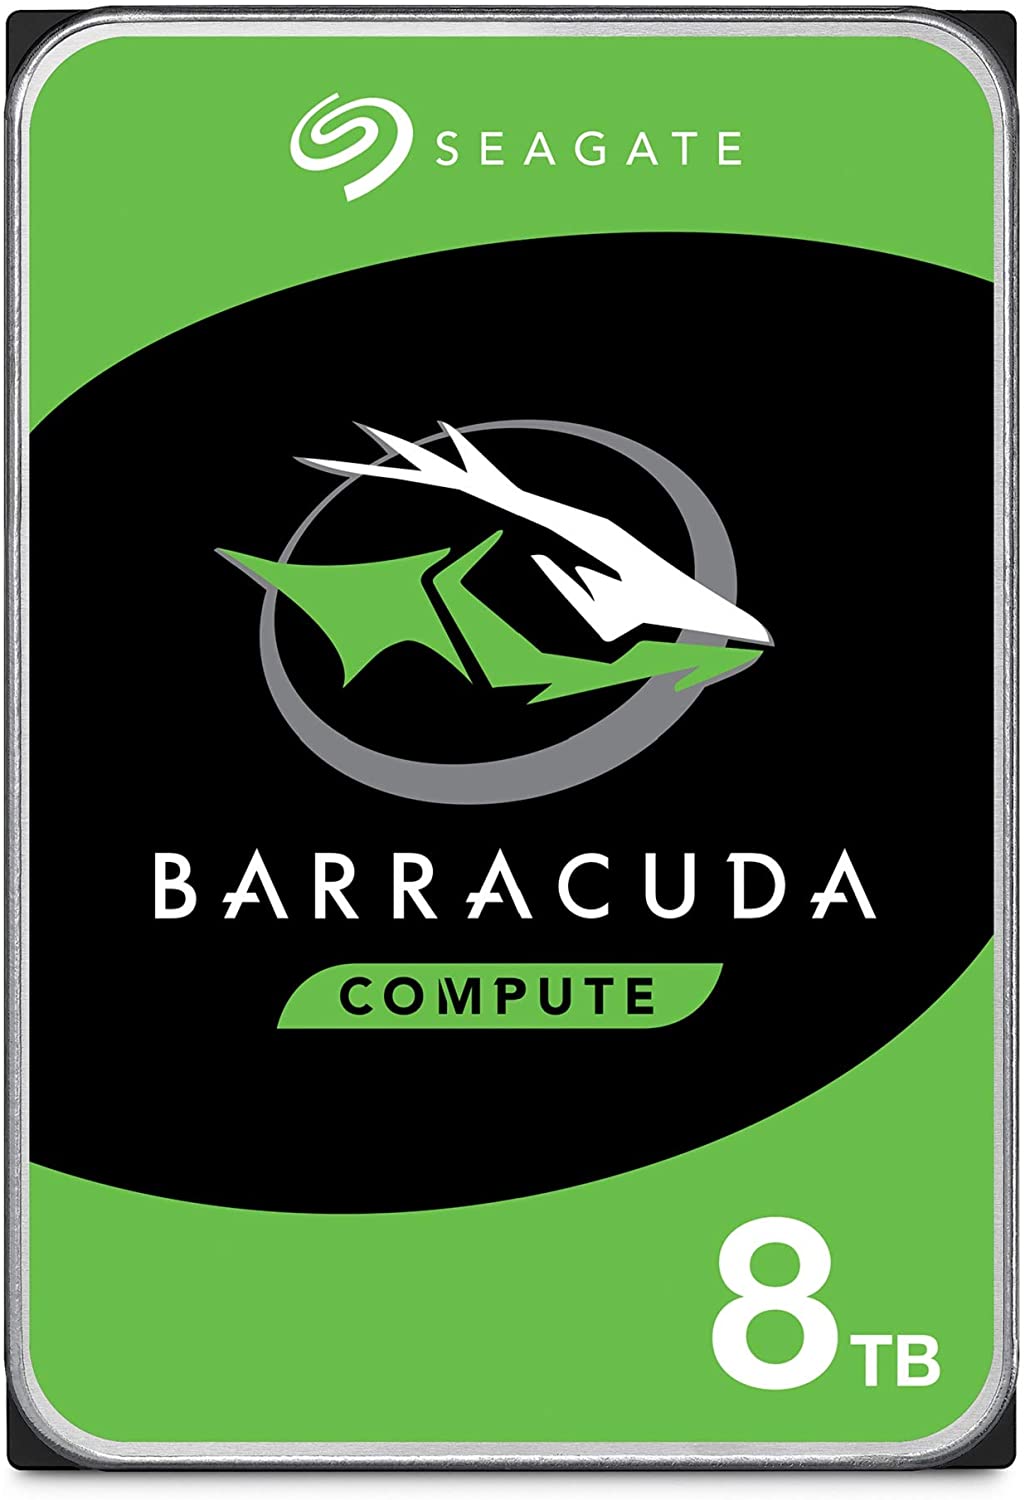 eagate BarraCuda 8TB 3.5 Inch Sata 6 Gb/s 5400 RPM 256MB Cache